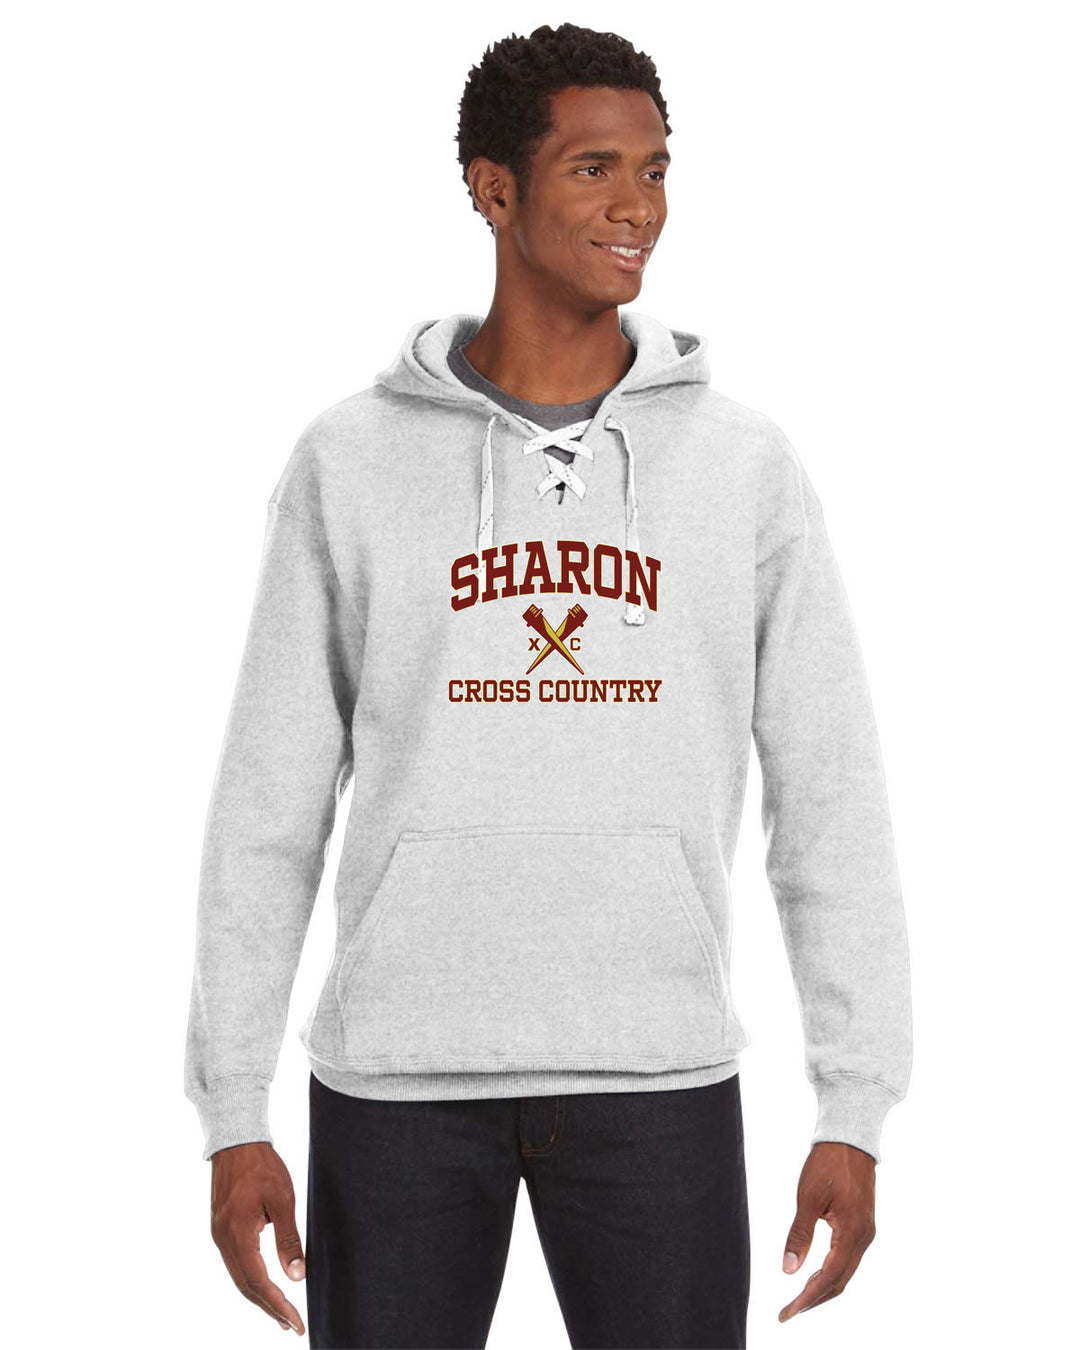 Sharon Cross Country Sport Lace Hooded Sweatshirt (JA8830)